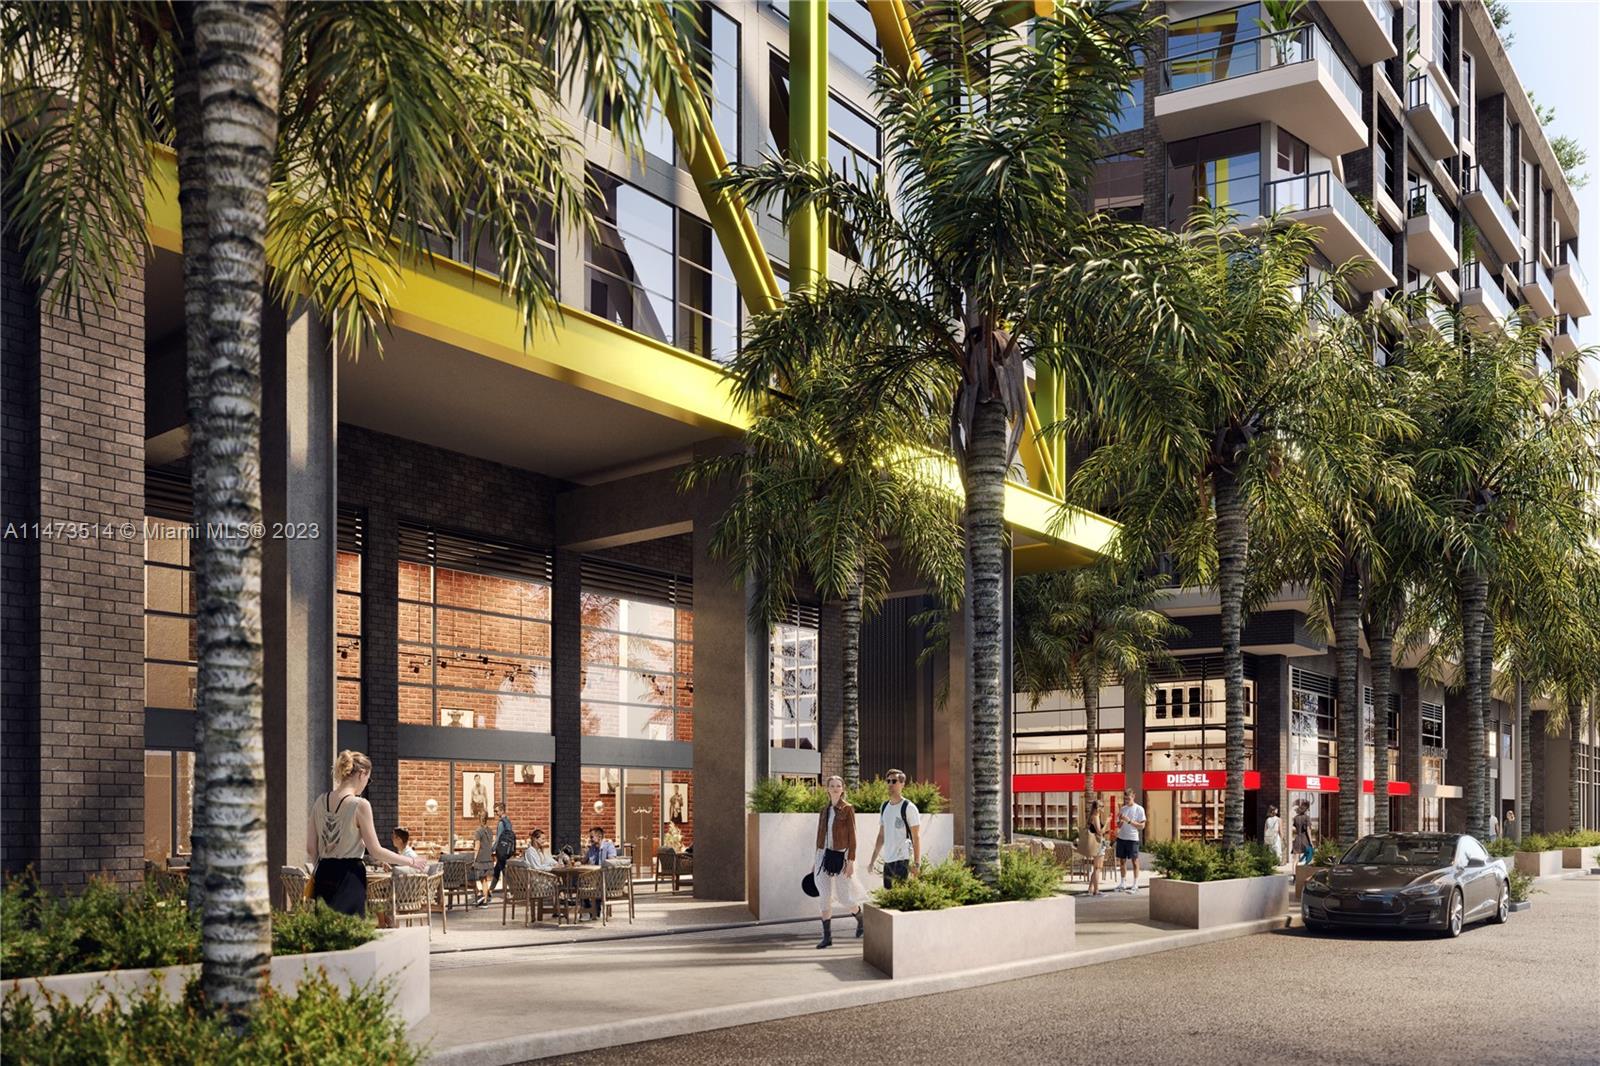 The Shop Miami - Wynwood Business Improvement District - Miami